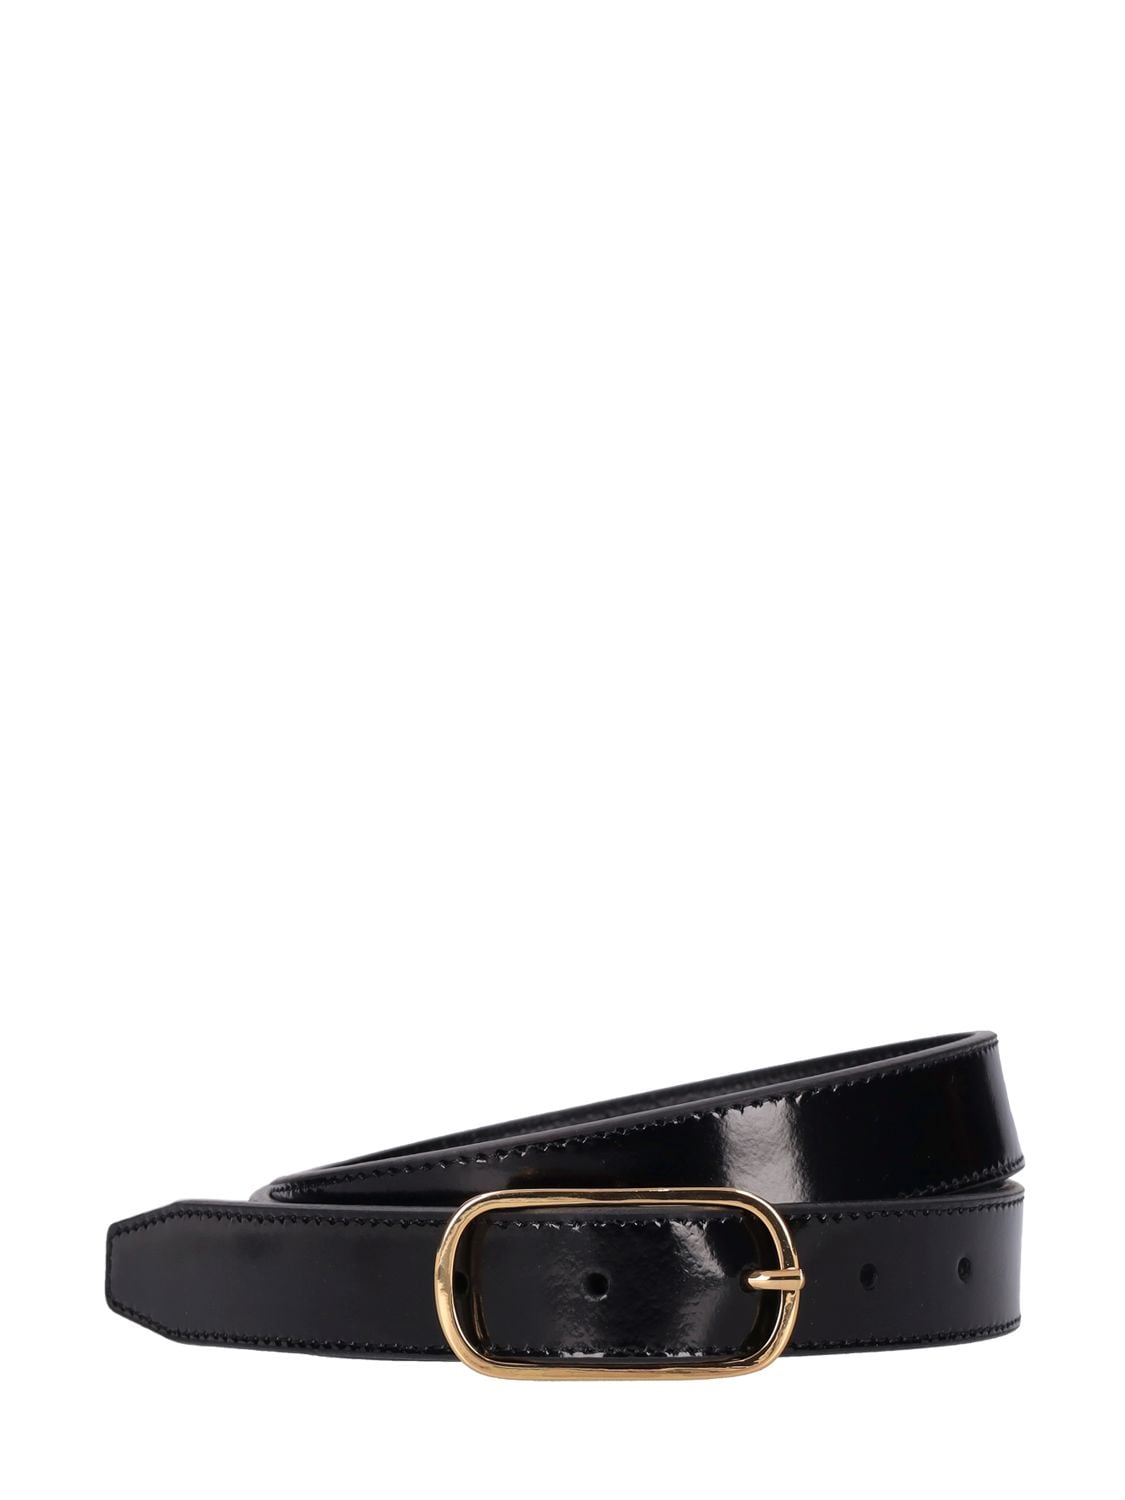 Saint Laurent oval-buckle leather belt - Black